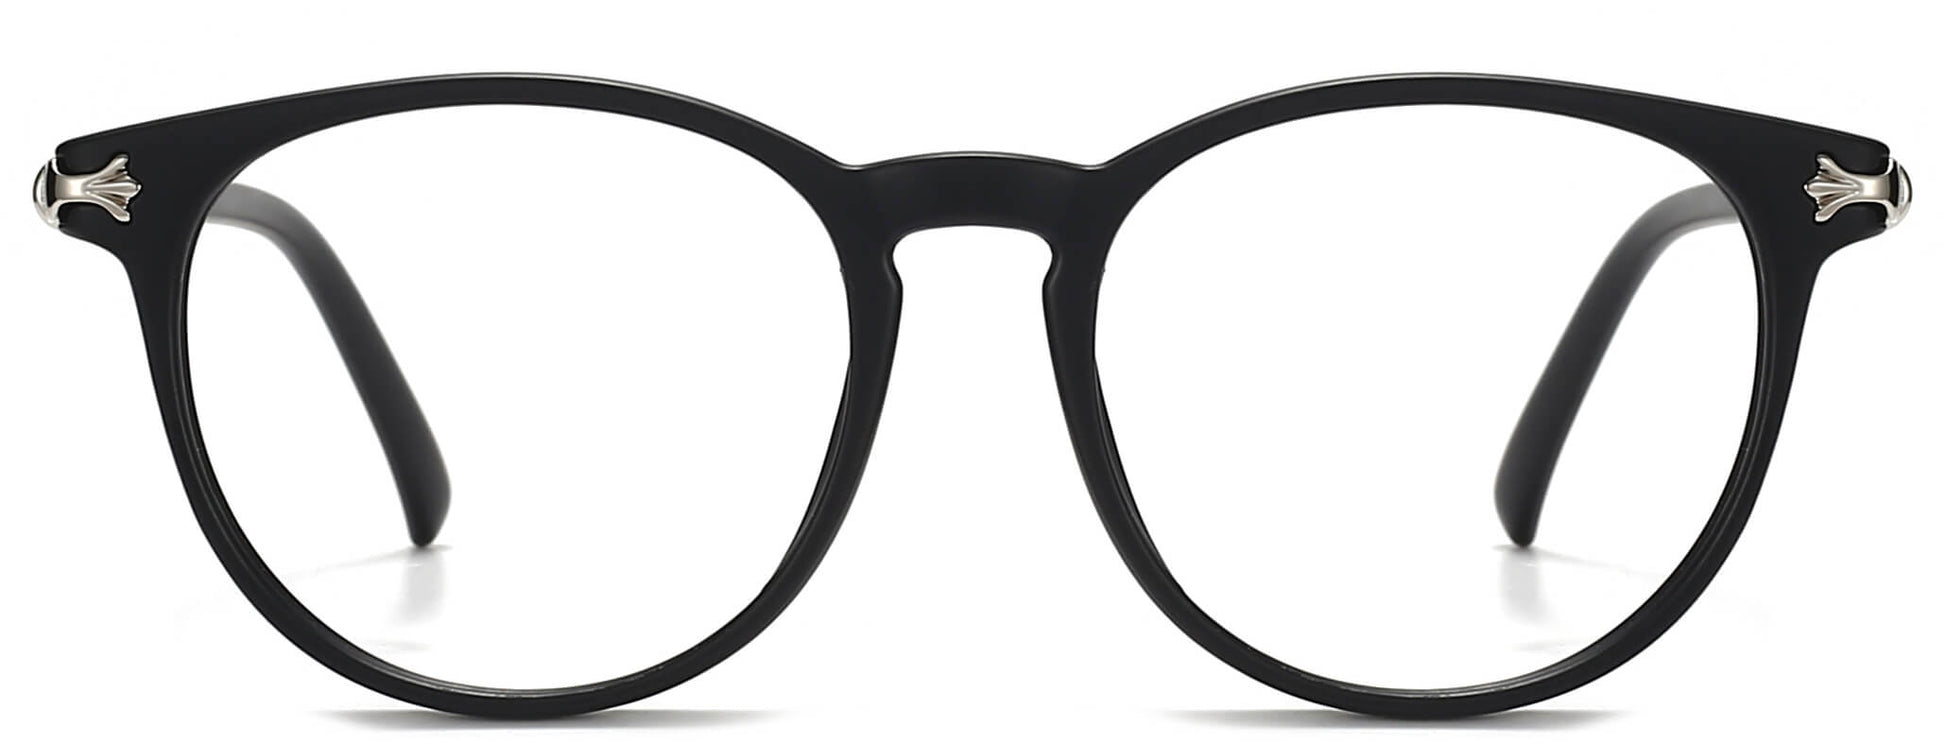 Amias Round Black Eyeglasses from ANRRI, front view